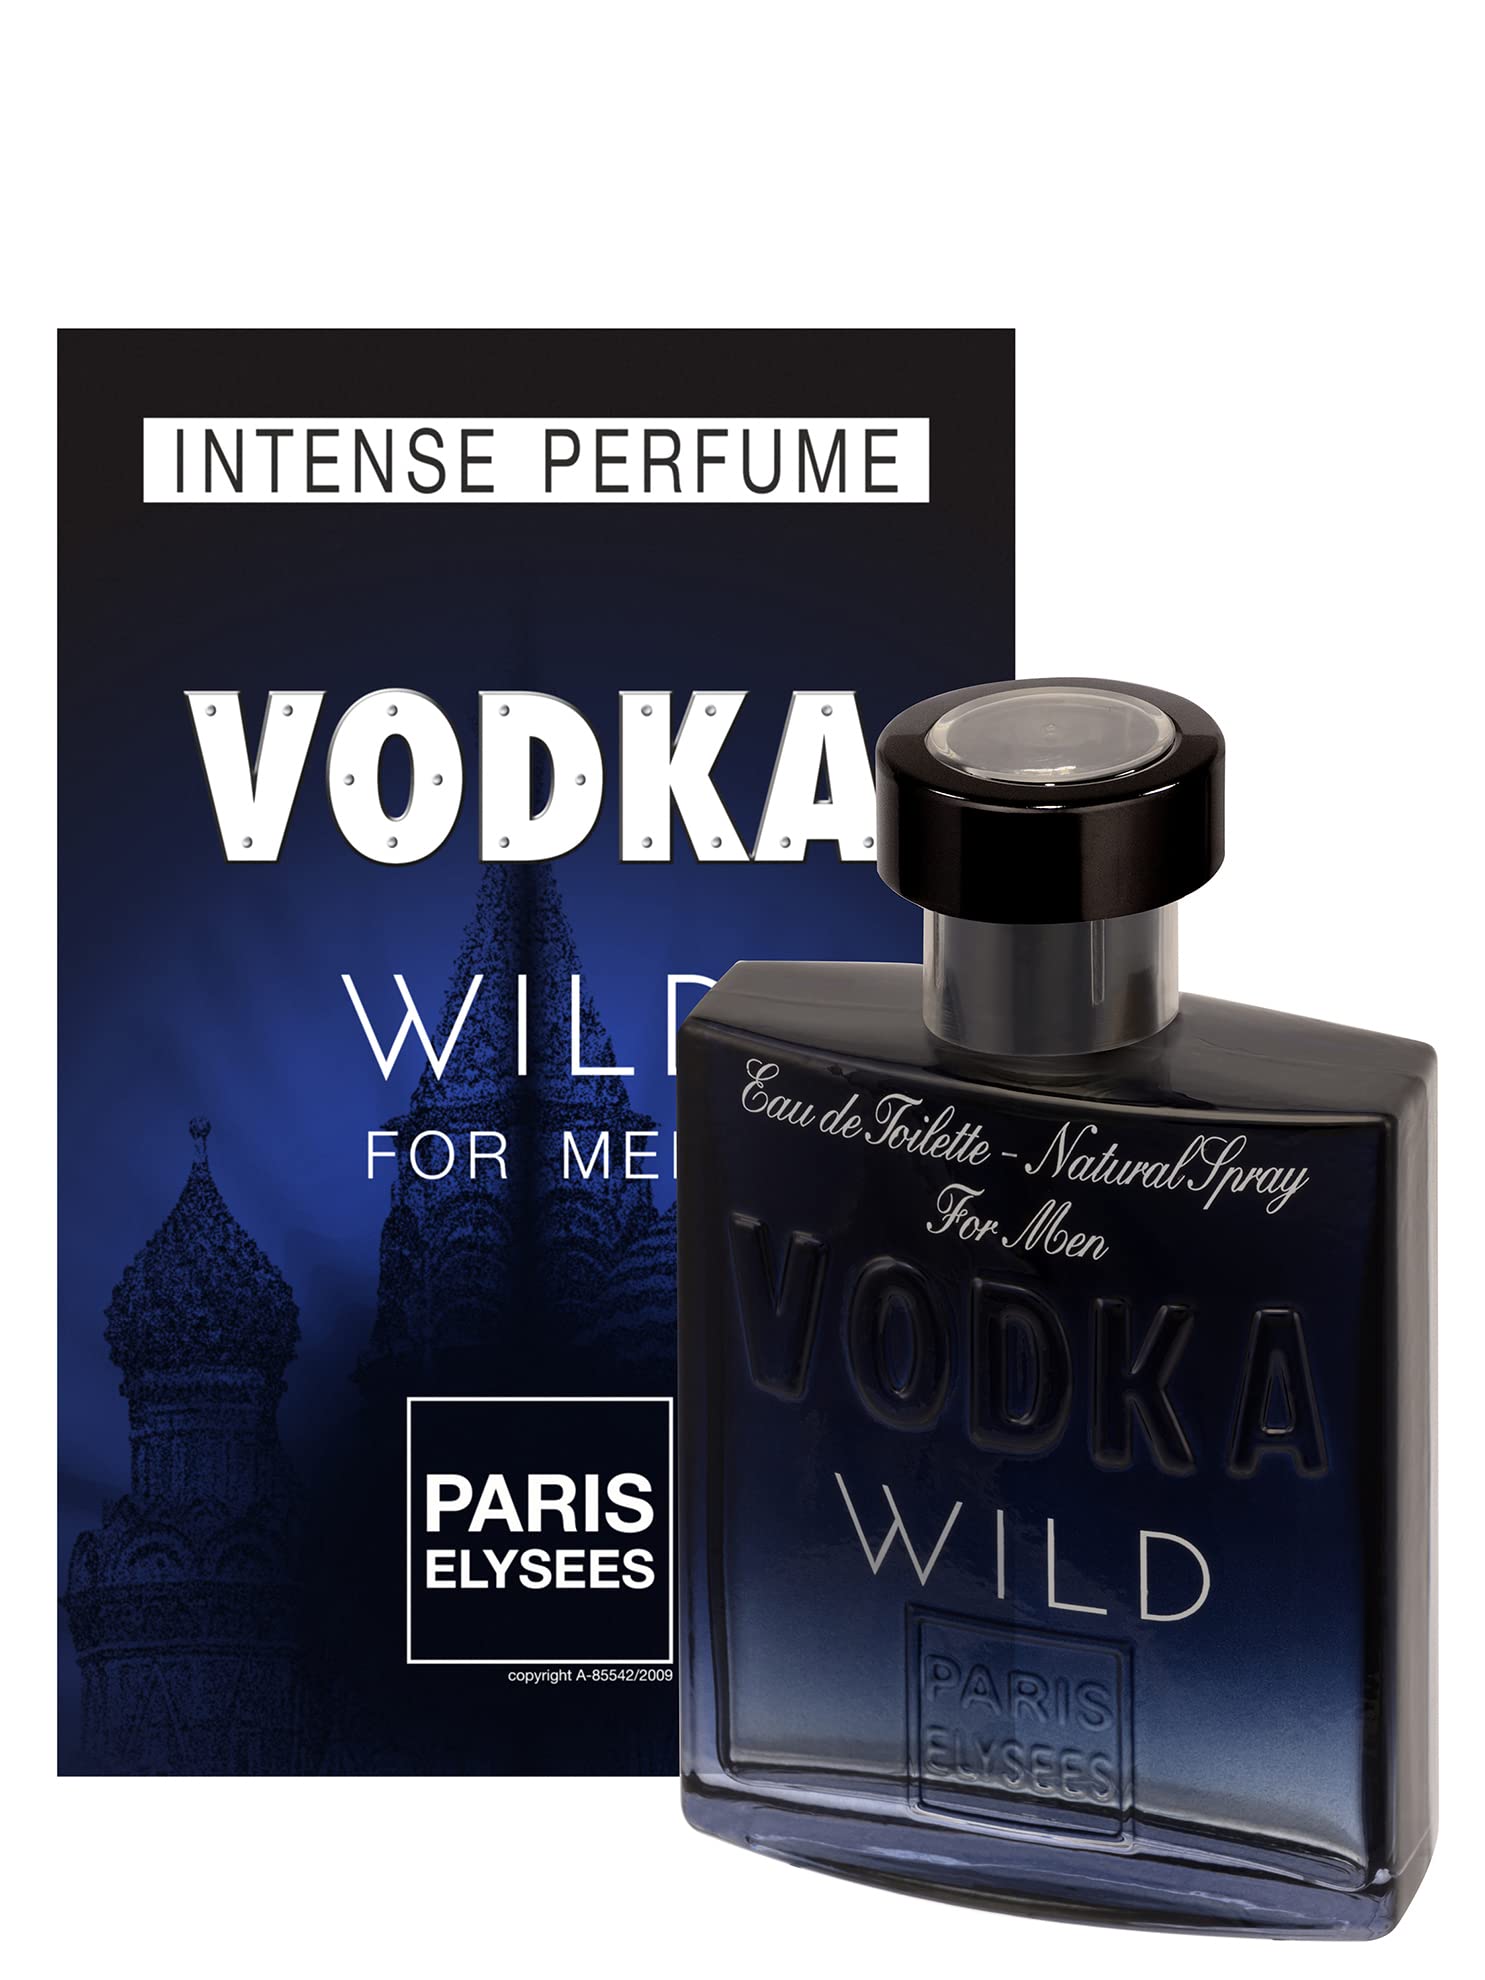 Perfume Vodka Wild